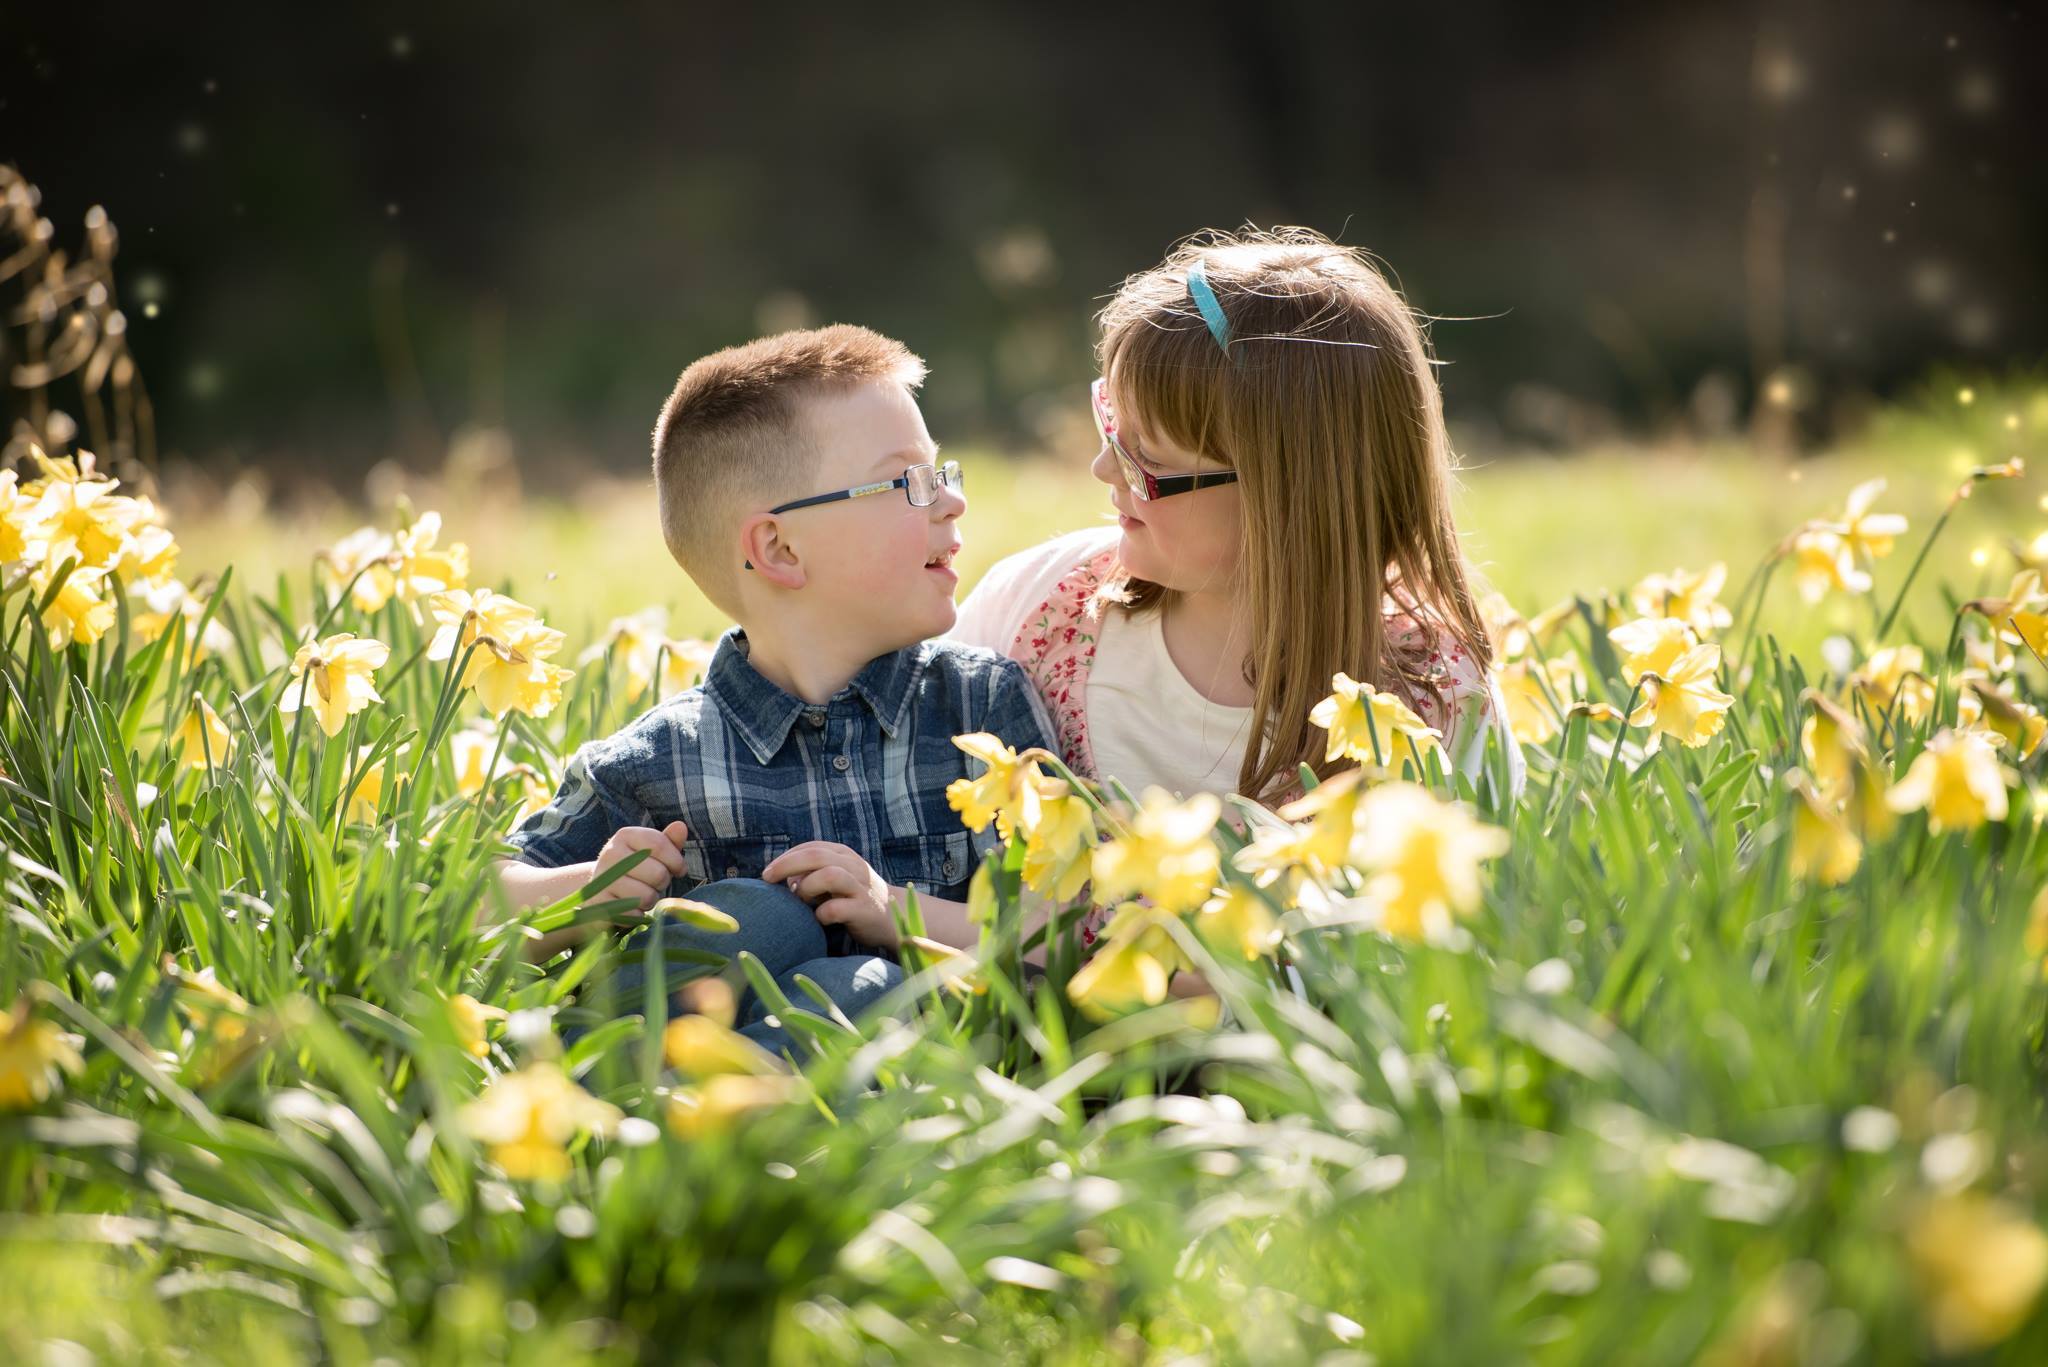 Family photographer Edinburgh - brother and sister in the daffodils, Edinburgh